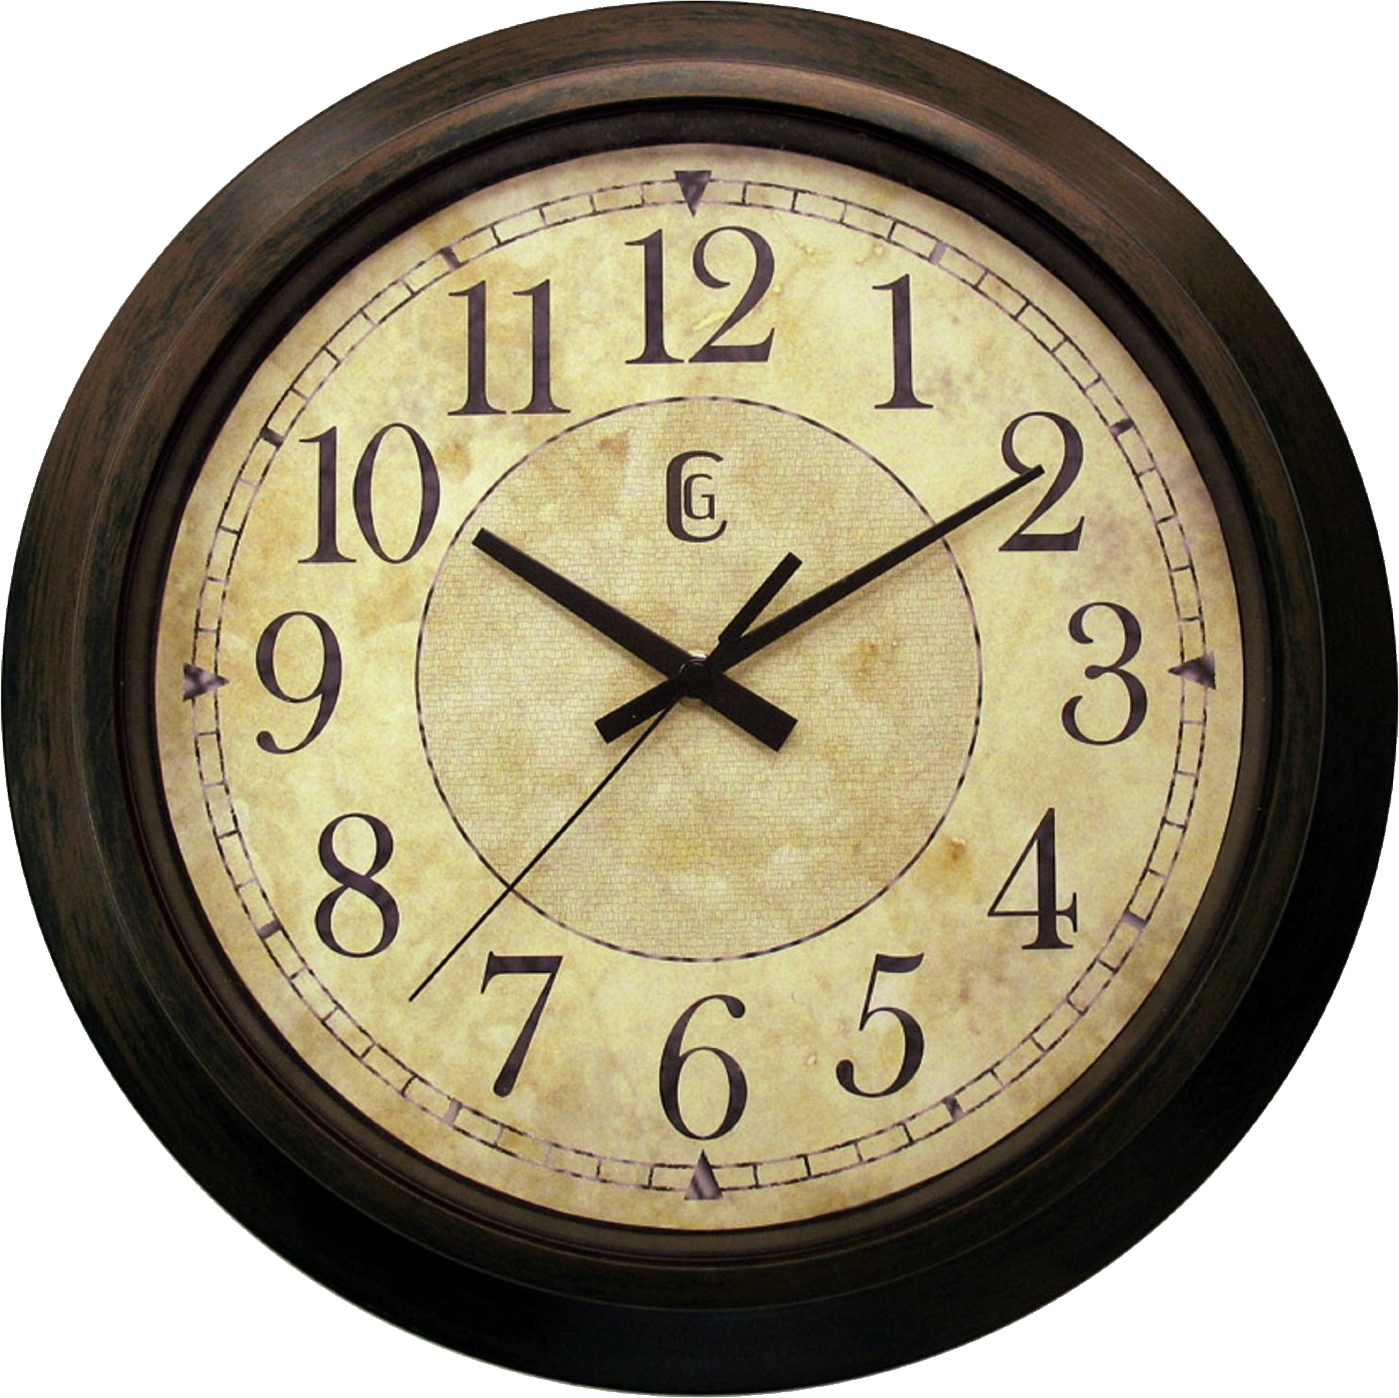 HQ Clock PNG Transparent Clock.PNG Images. | PlusPNG